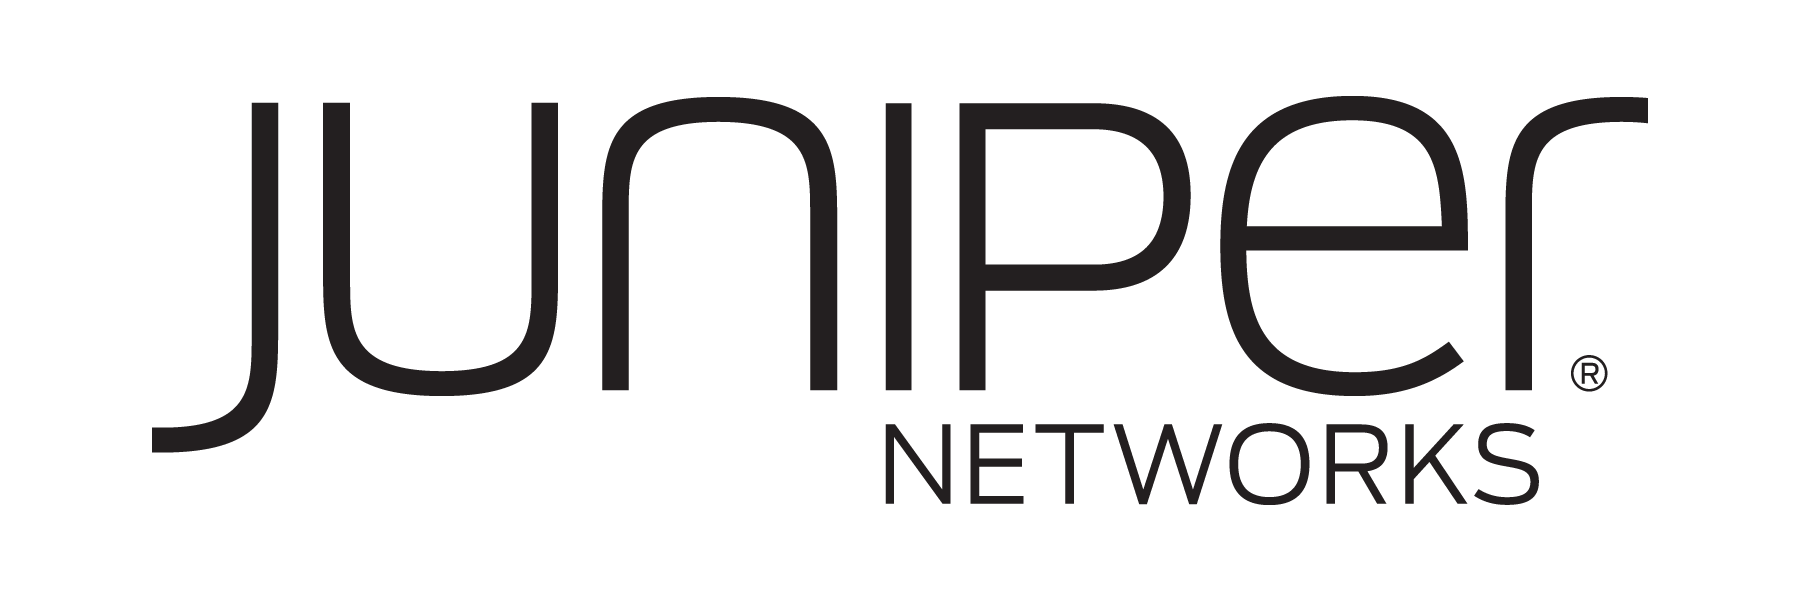 Juniper_Networks-rgb-black